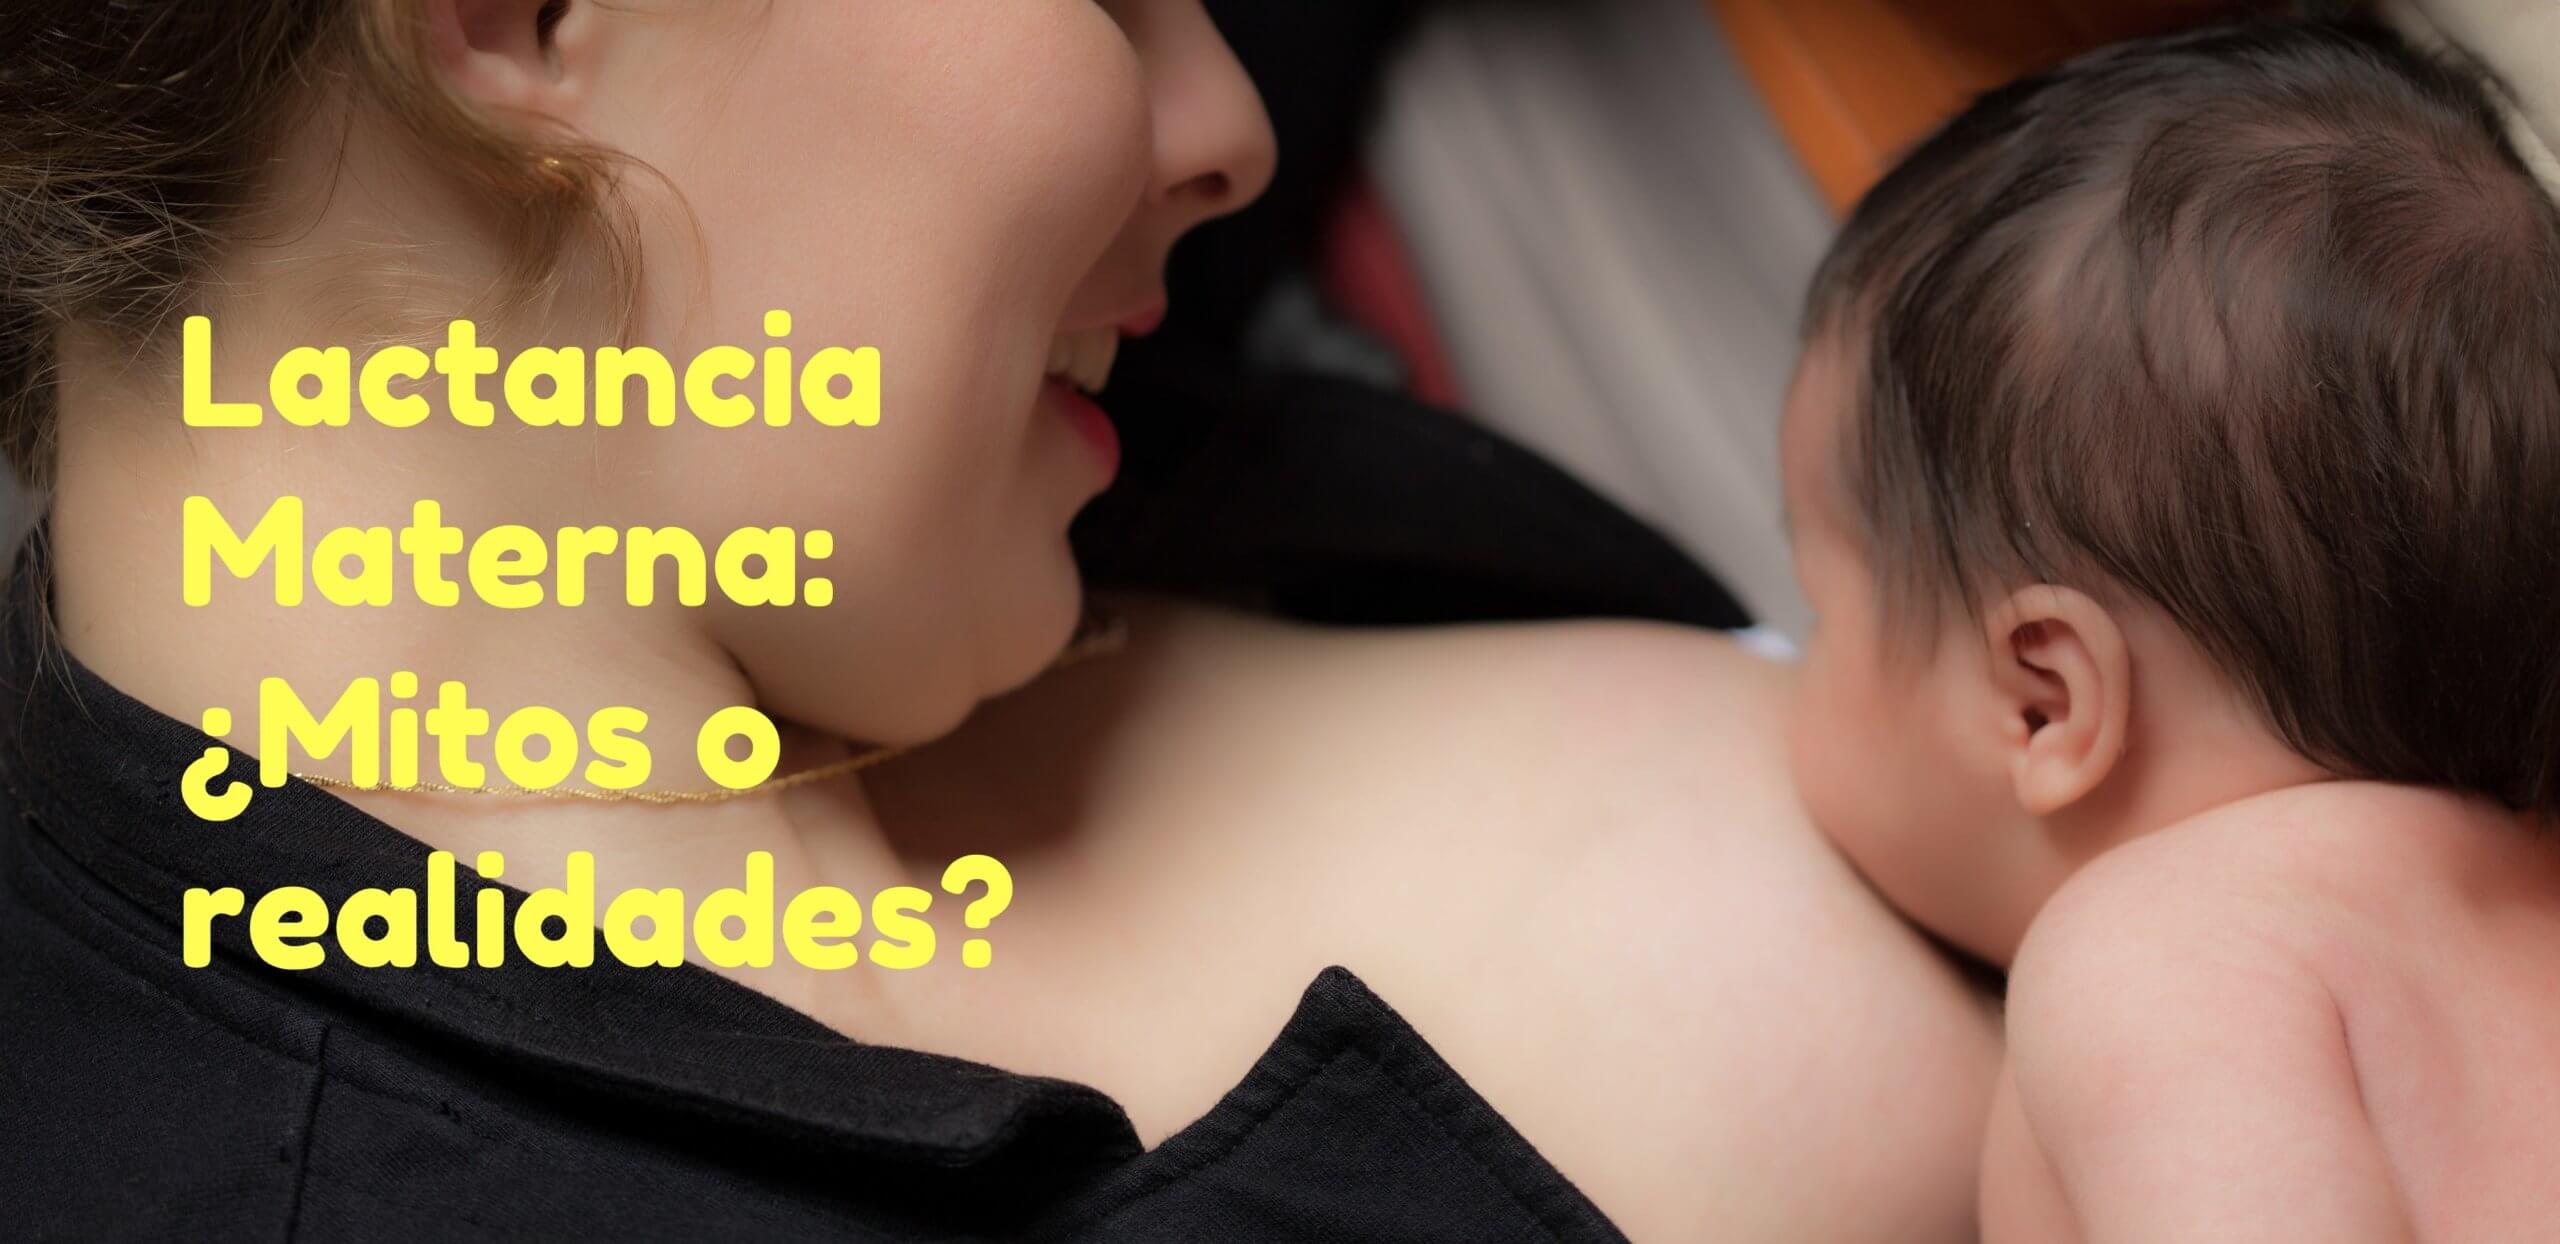 Mitos o realidades: Lo que hemos escuchado de la lactancia materna